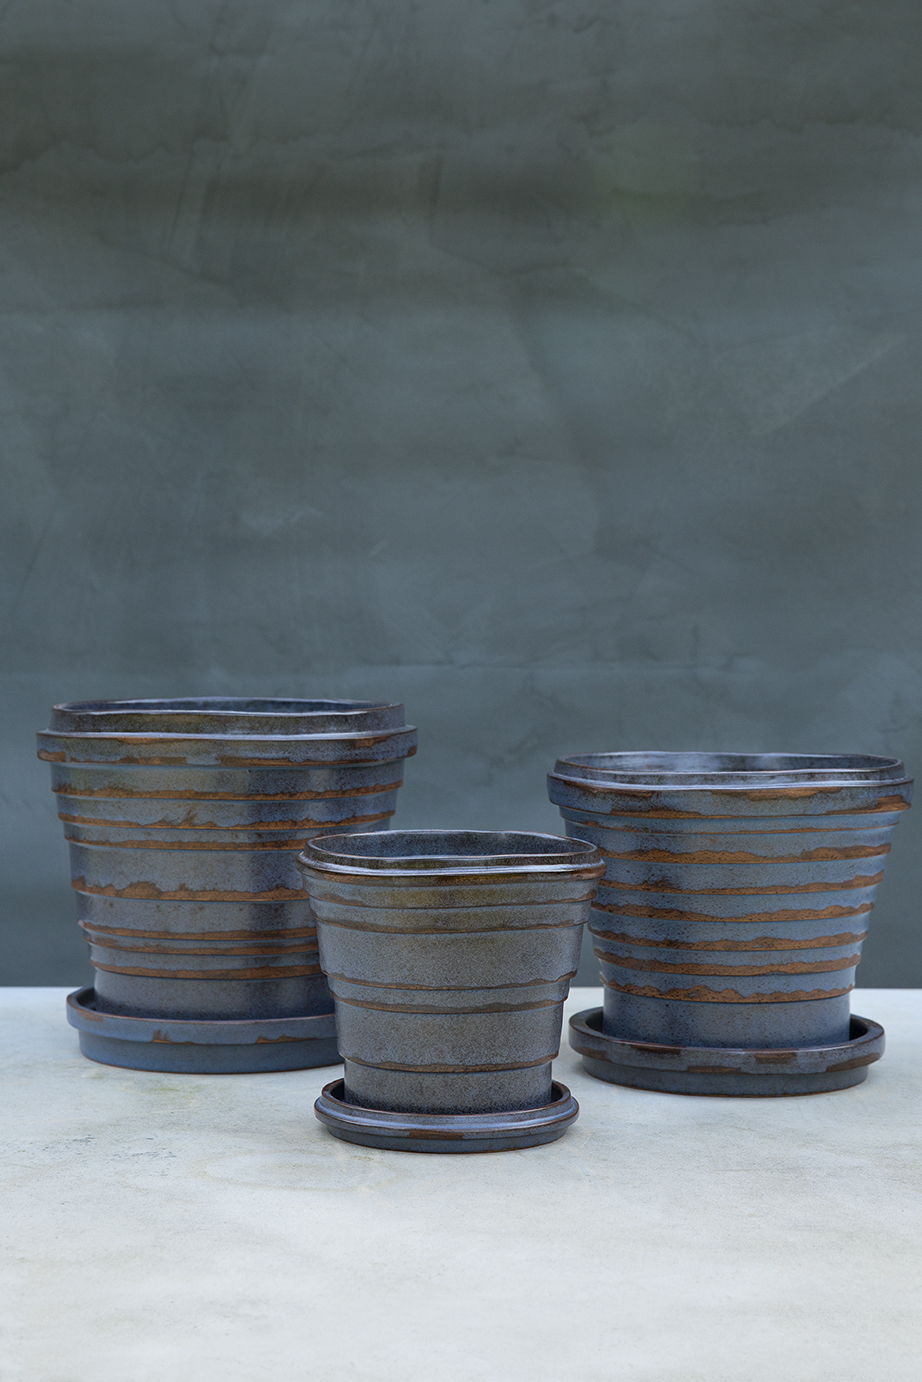 Three glazed blue-brown pots in three different sizes.